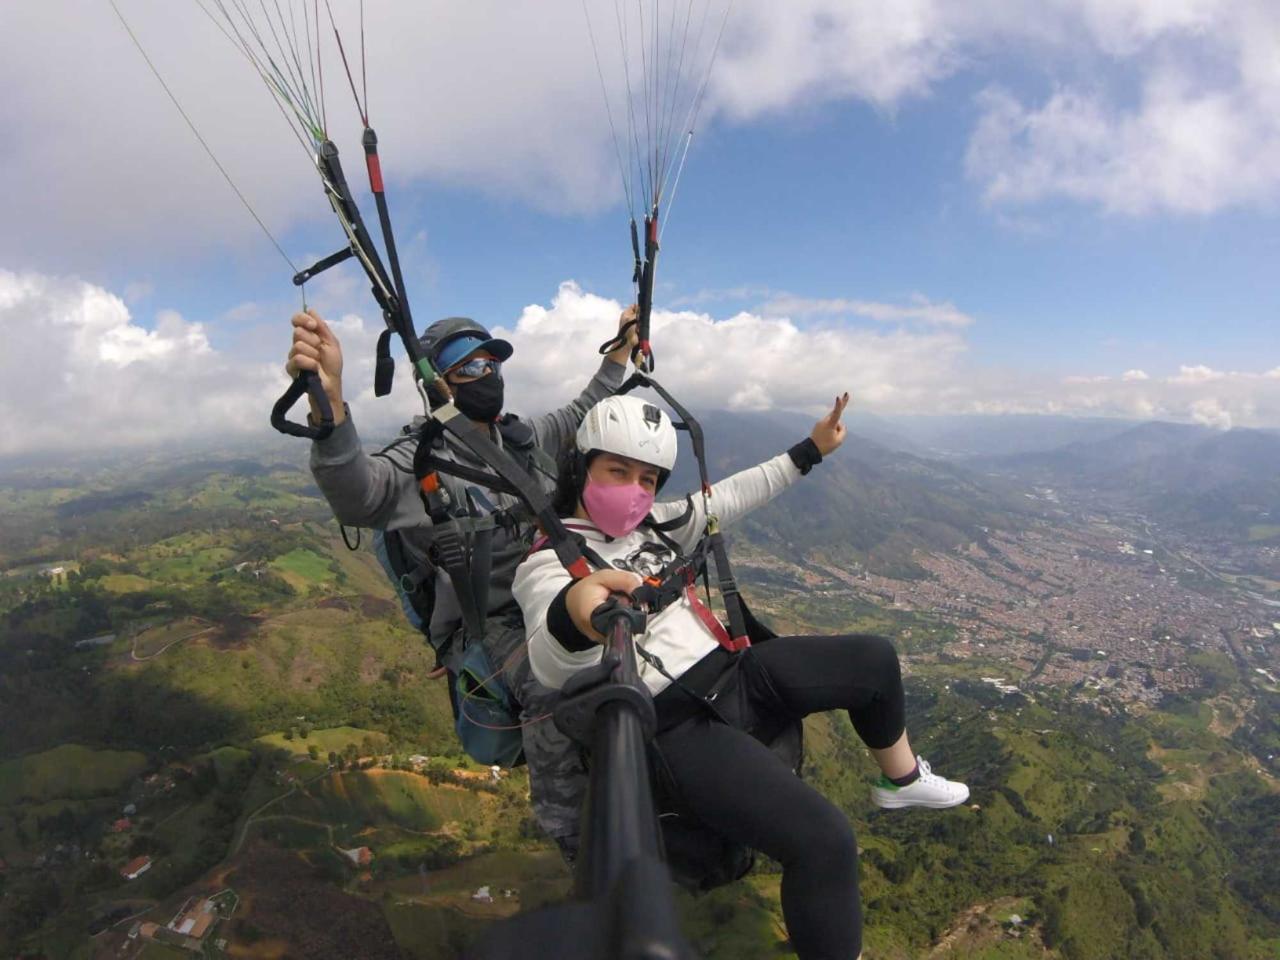 Medellin Paragliding 2.5 hour tour - 15-20min flight